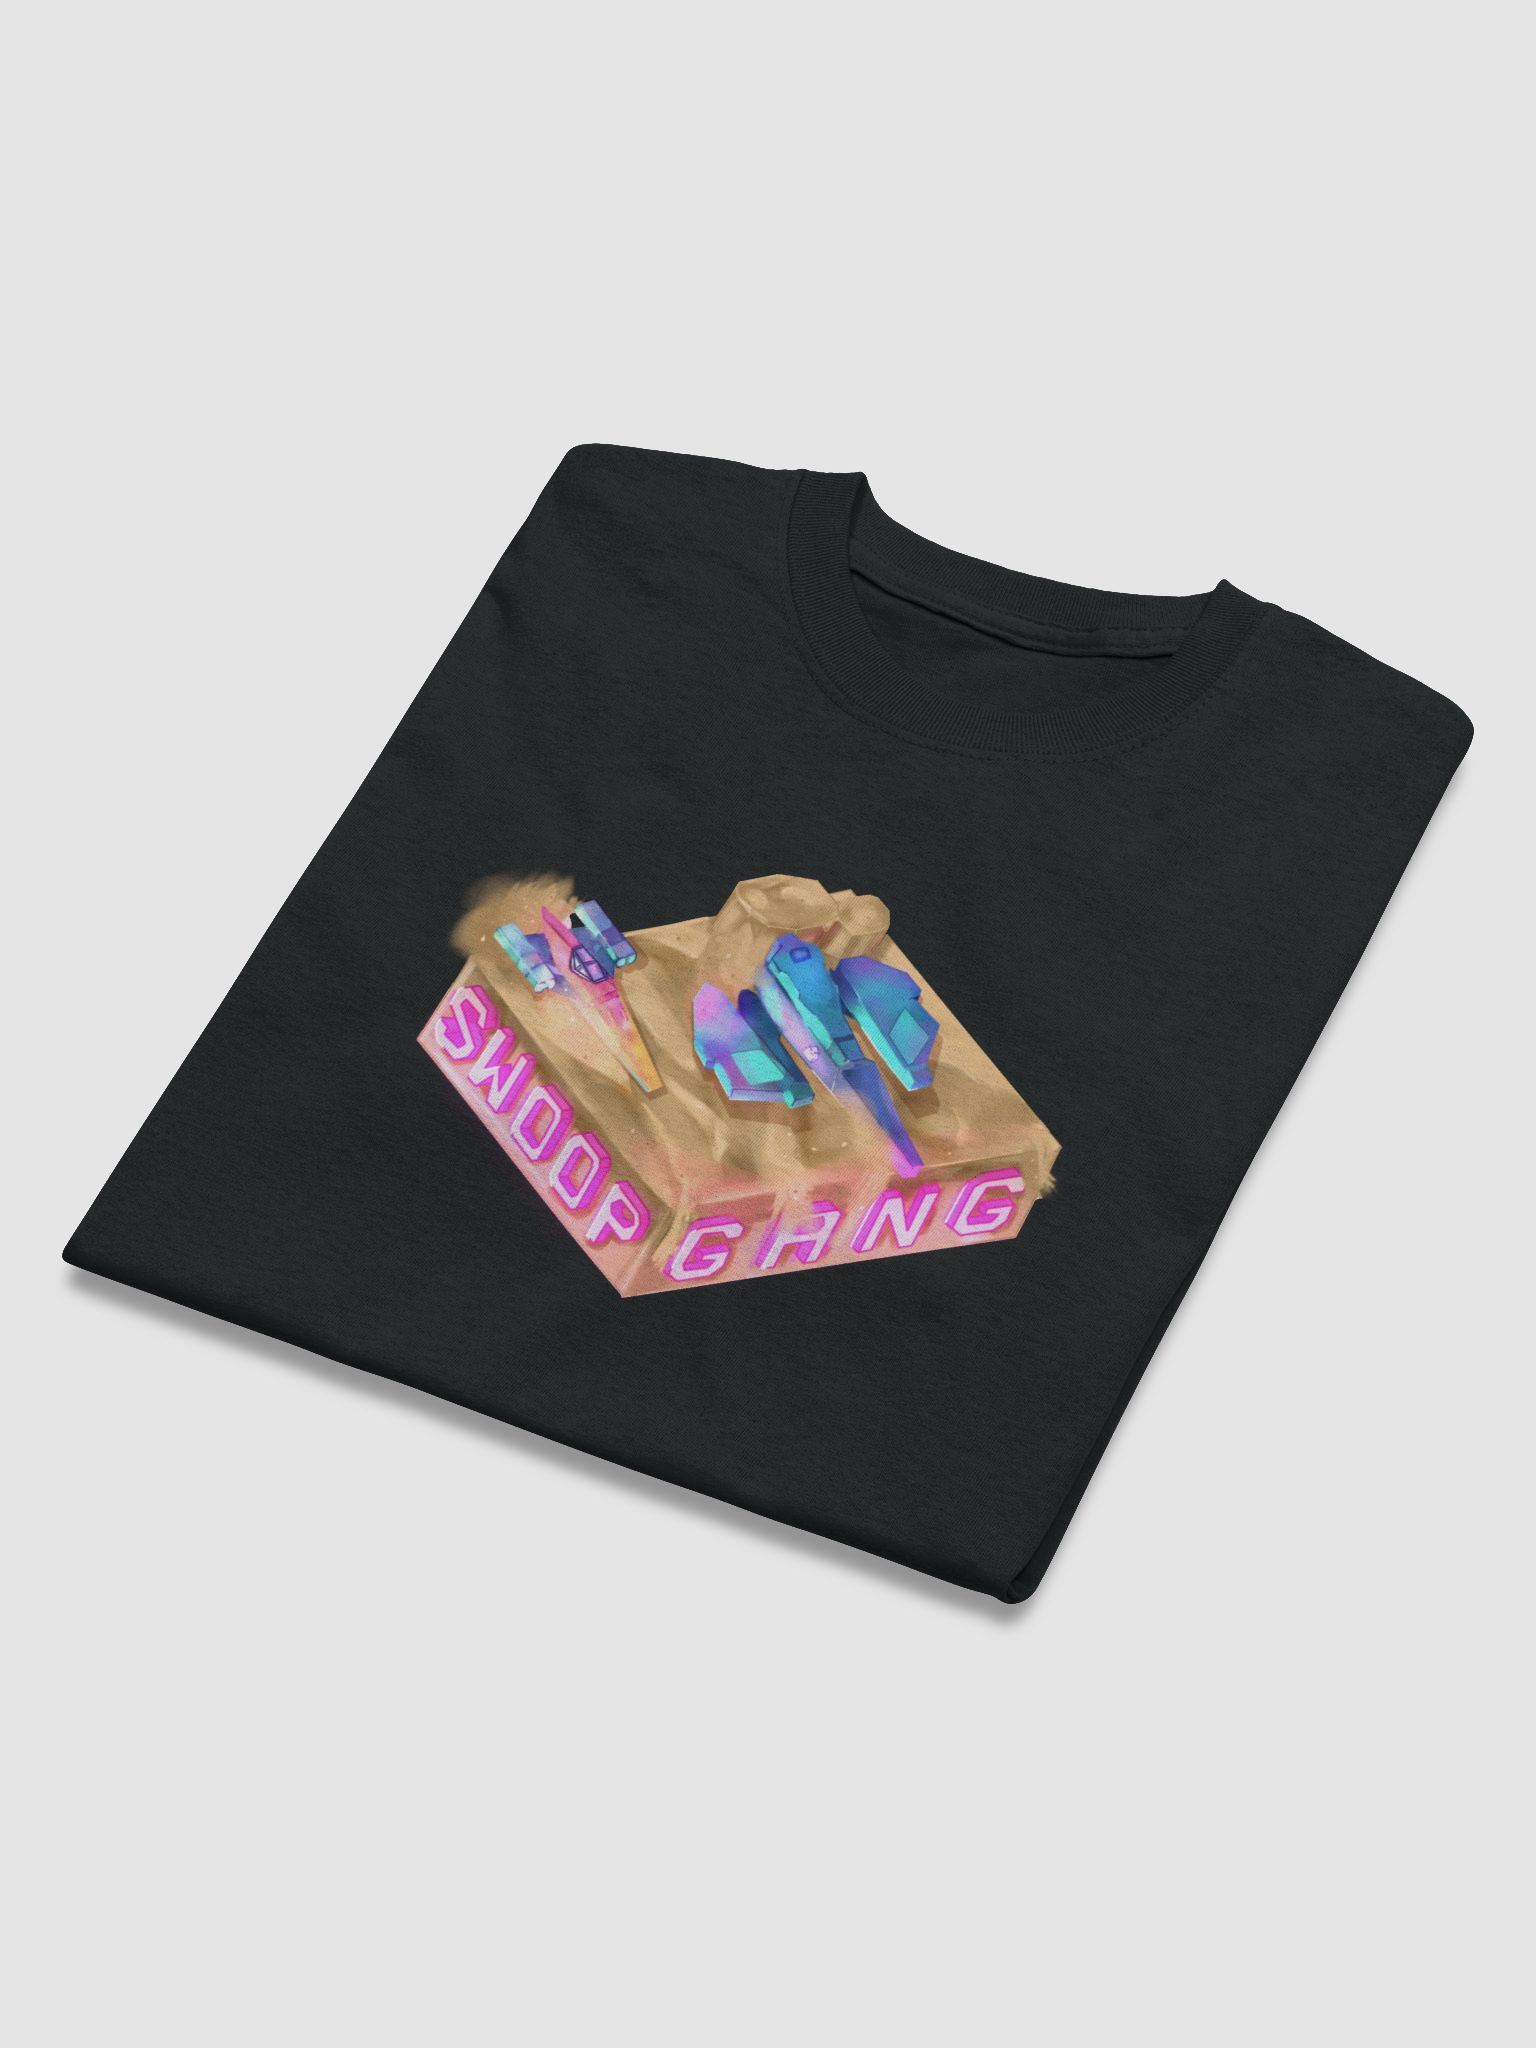 Swoop Gang Full - T-Shirt | Thesaltfactory